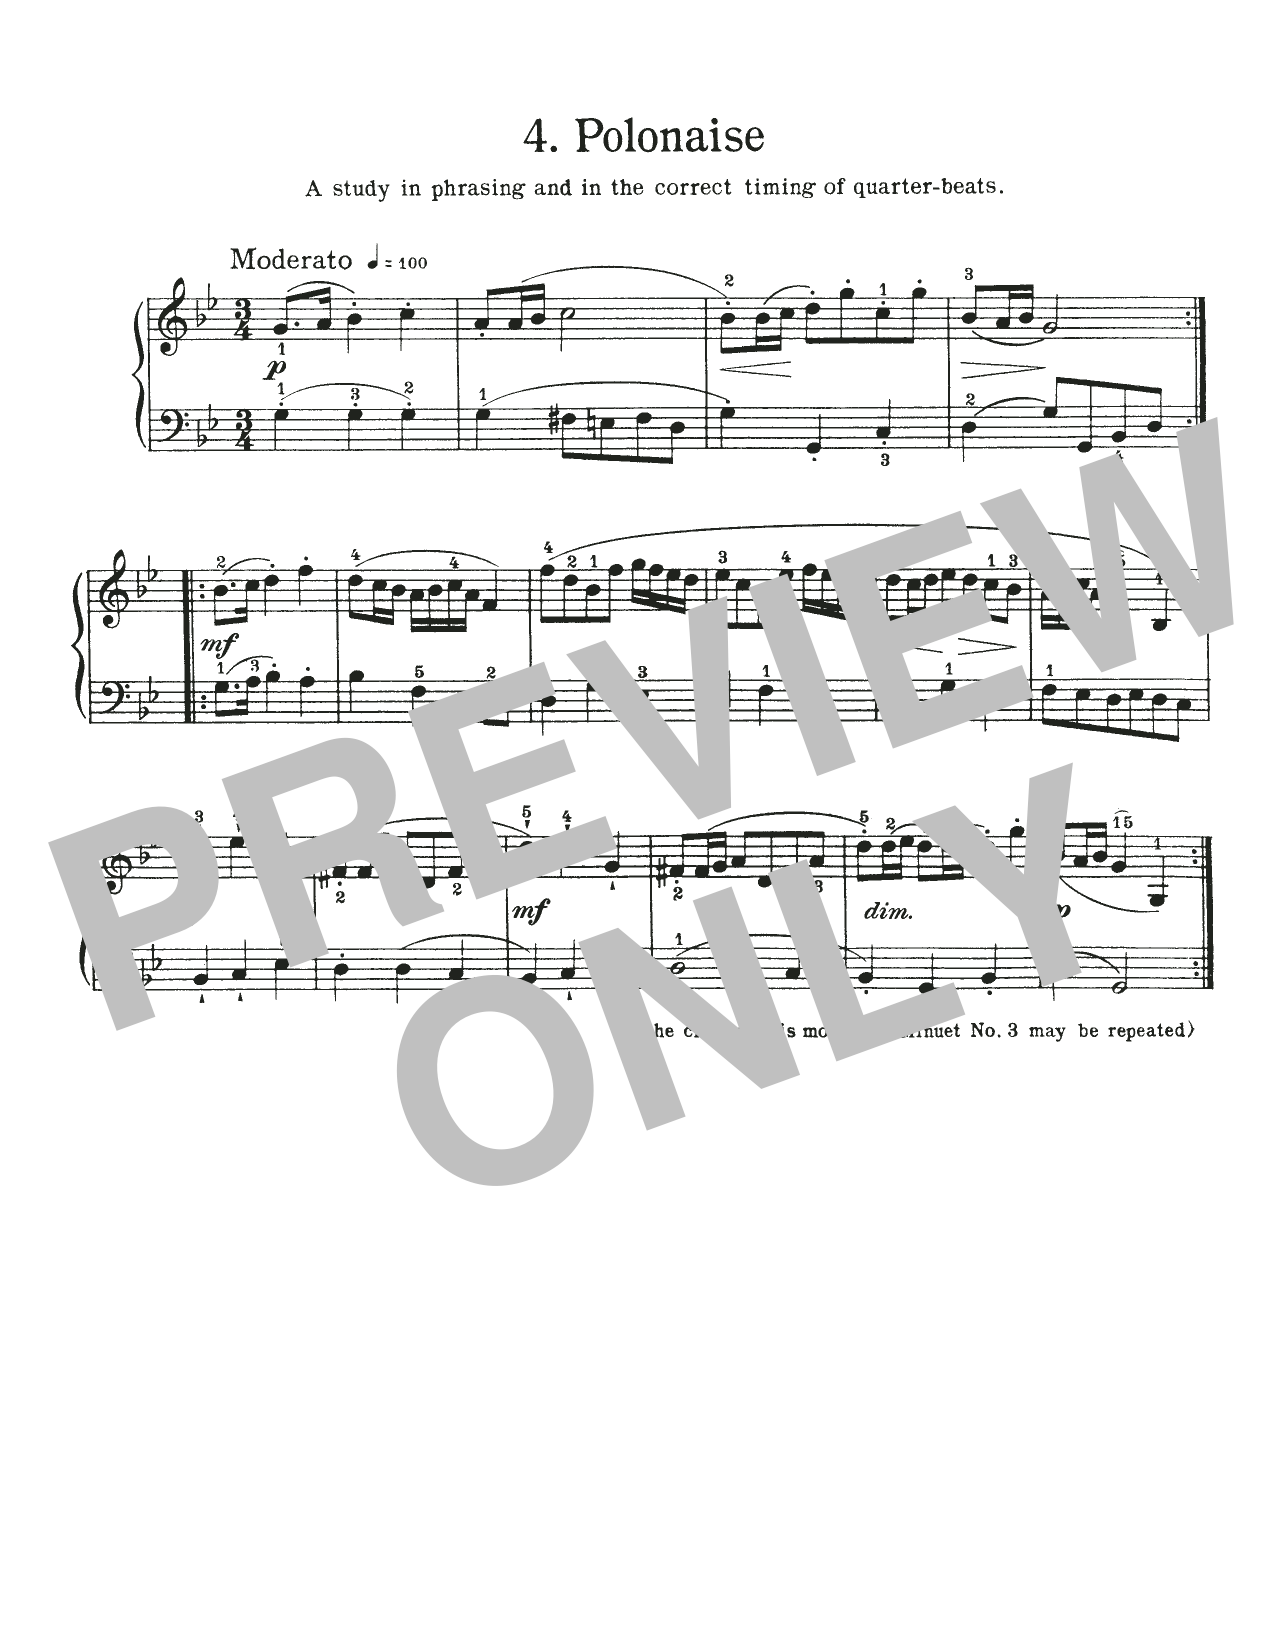 Johann Sebastian Bach Polonaise In G Minor, BWV Appendix 119 Sheet Music Notes & Chords for Piano Solo - Download or Print PDF